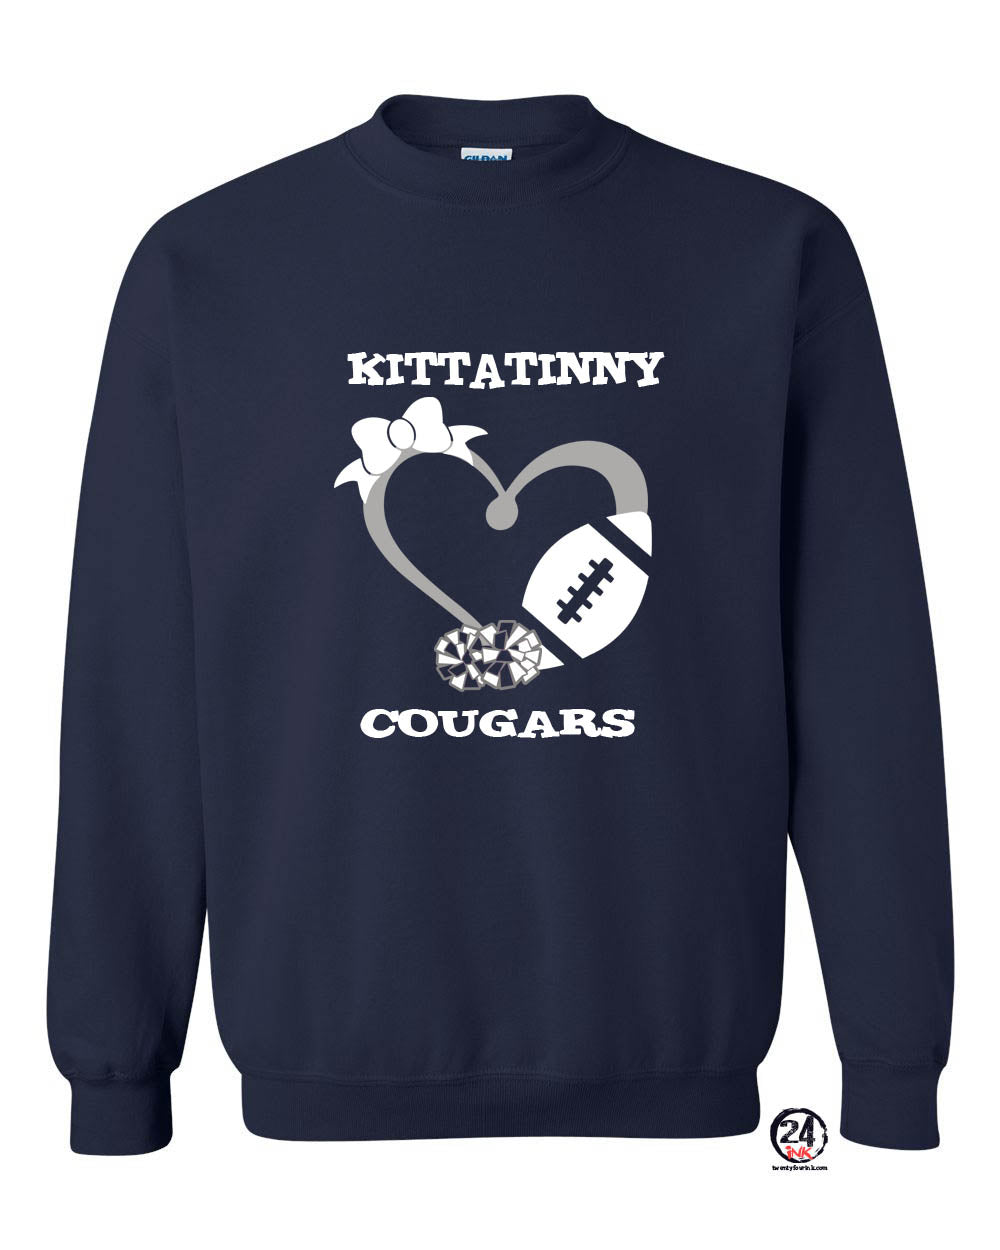 Kittatinny Cheer Design 3 non hooded sweatshirt